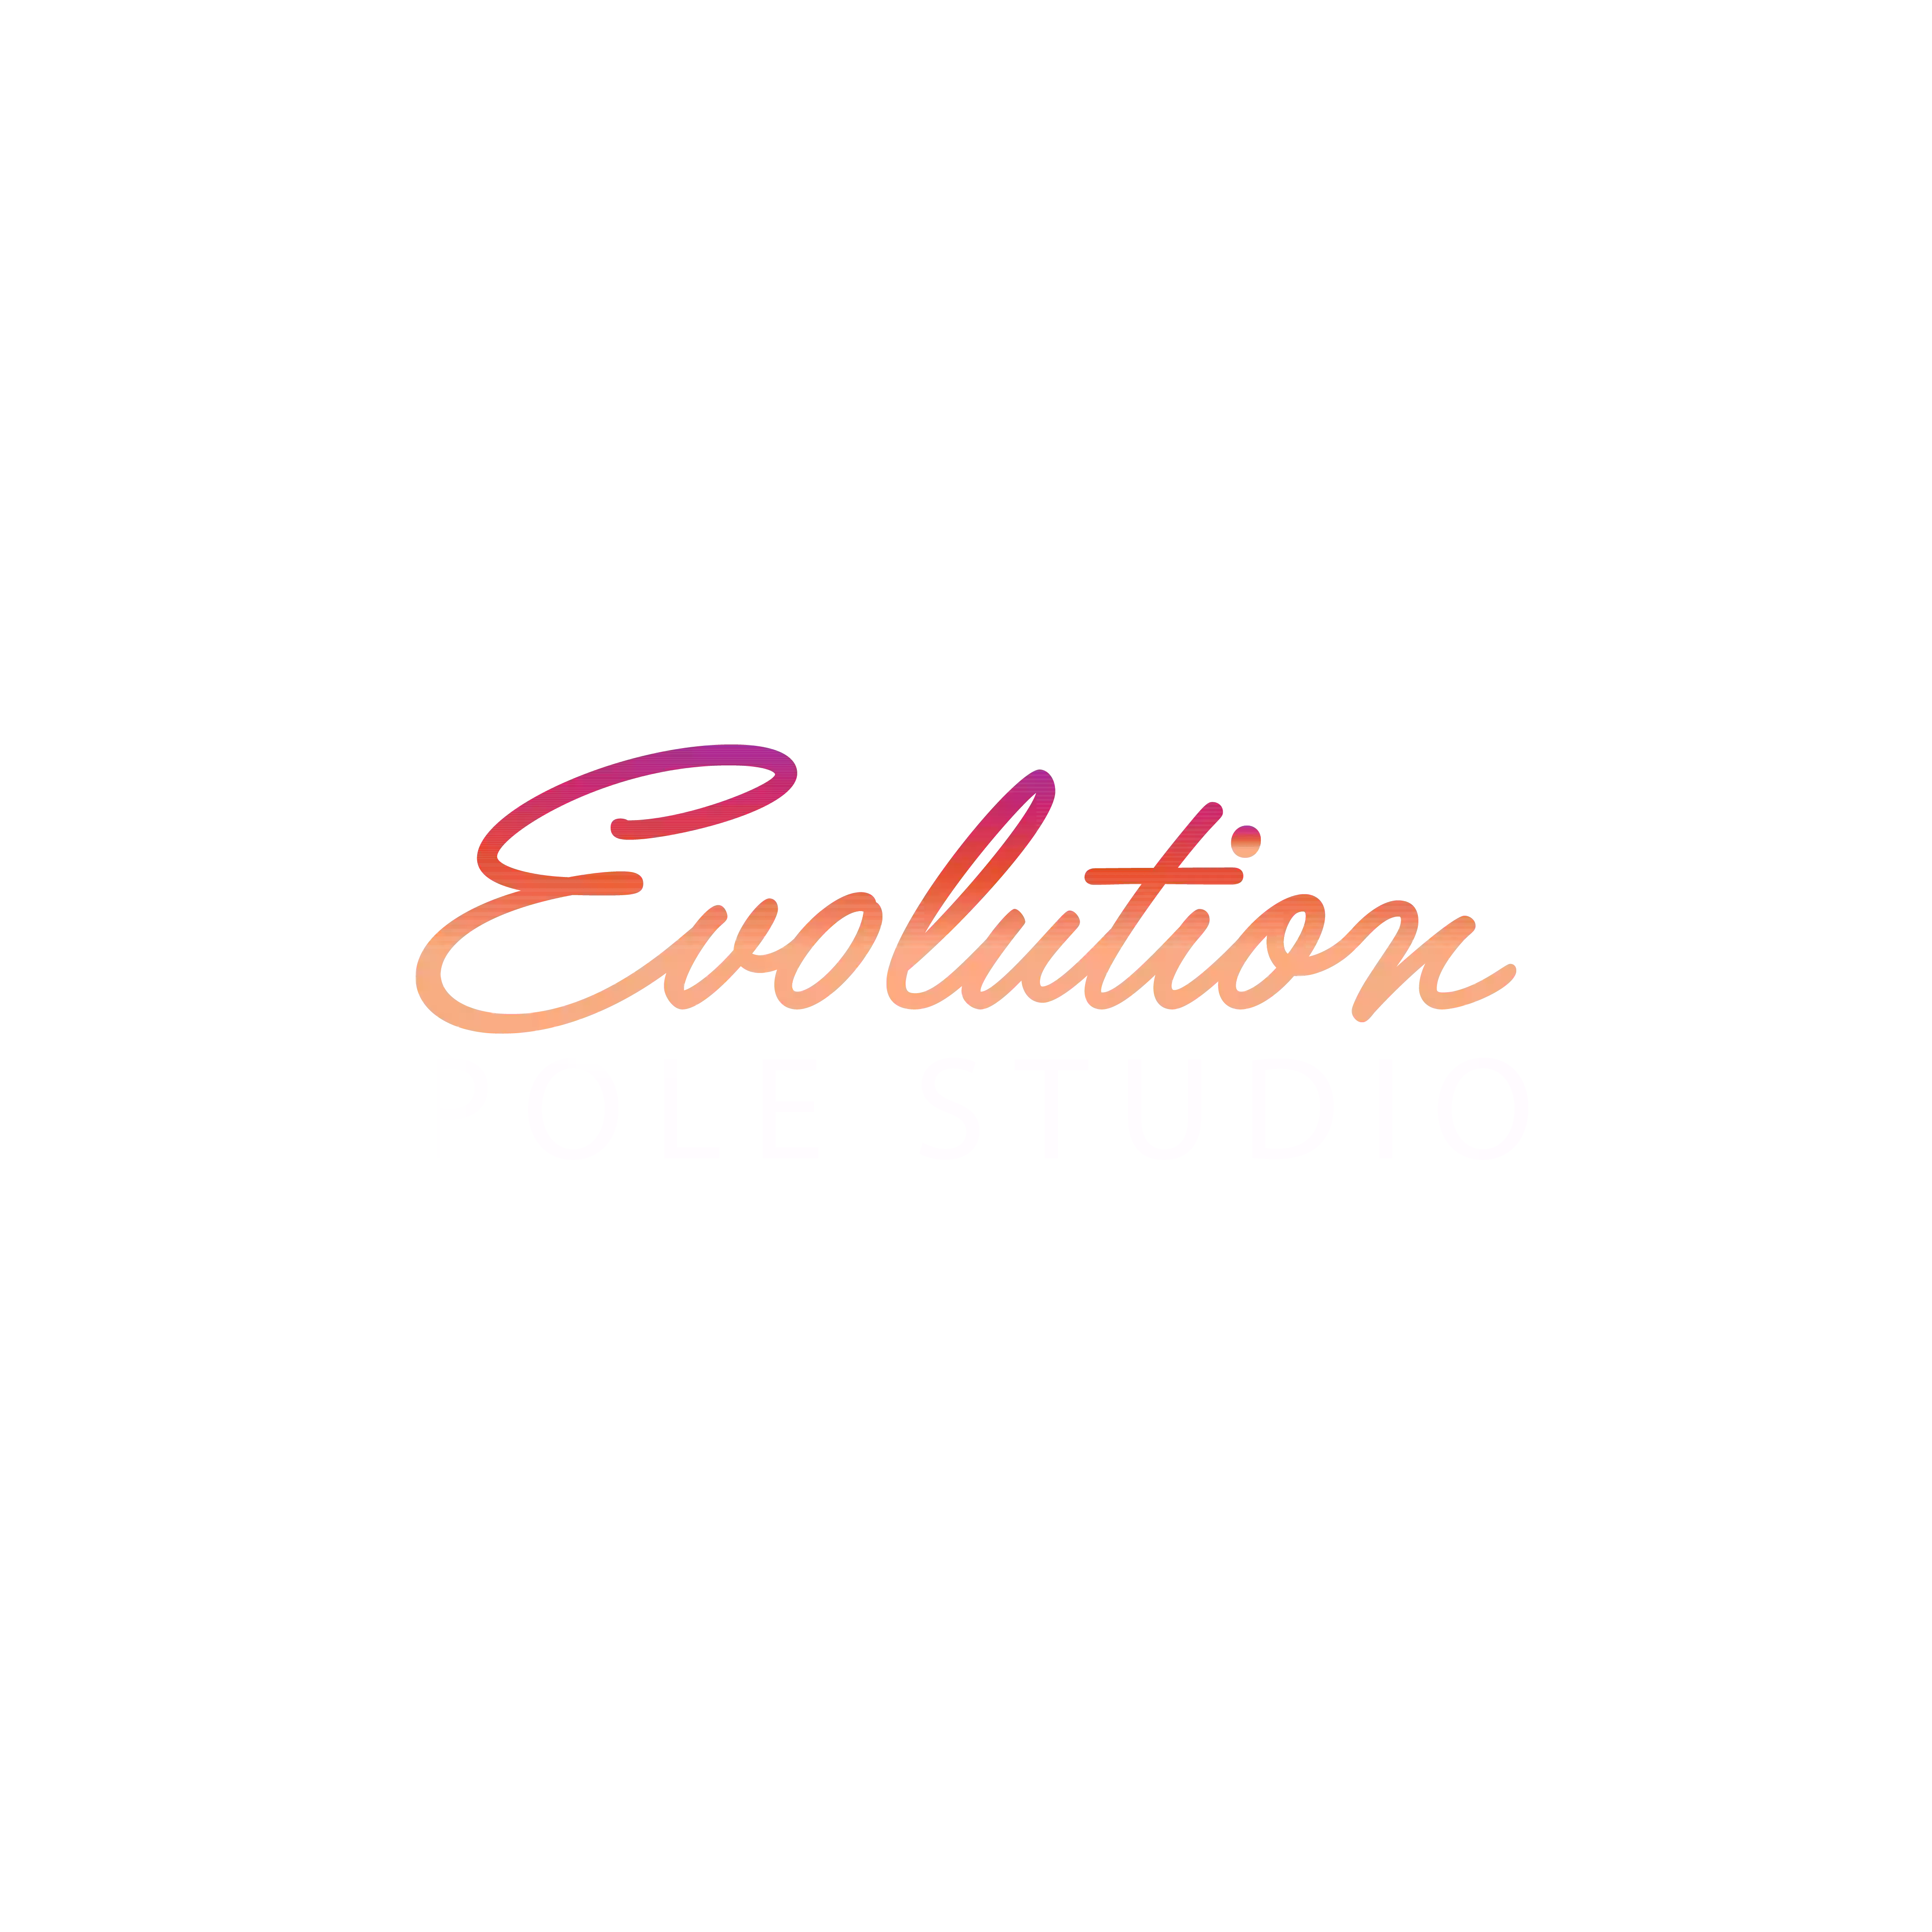 Evolution pole dance studio